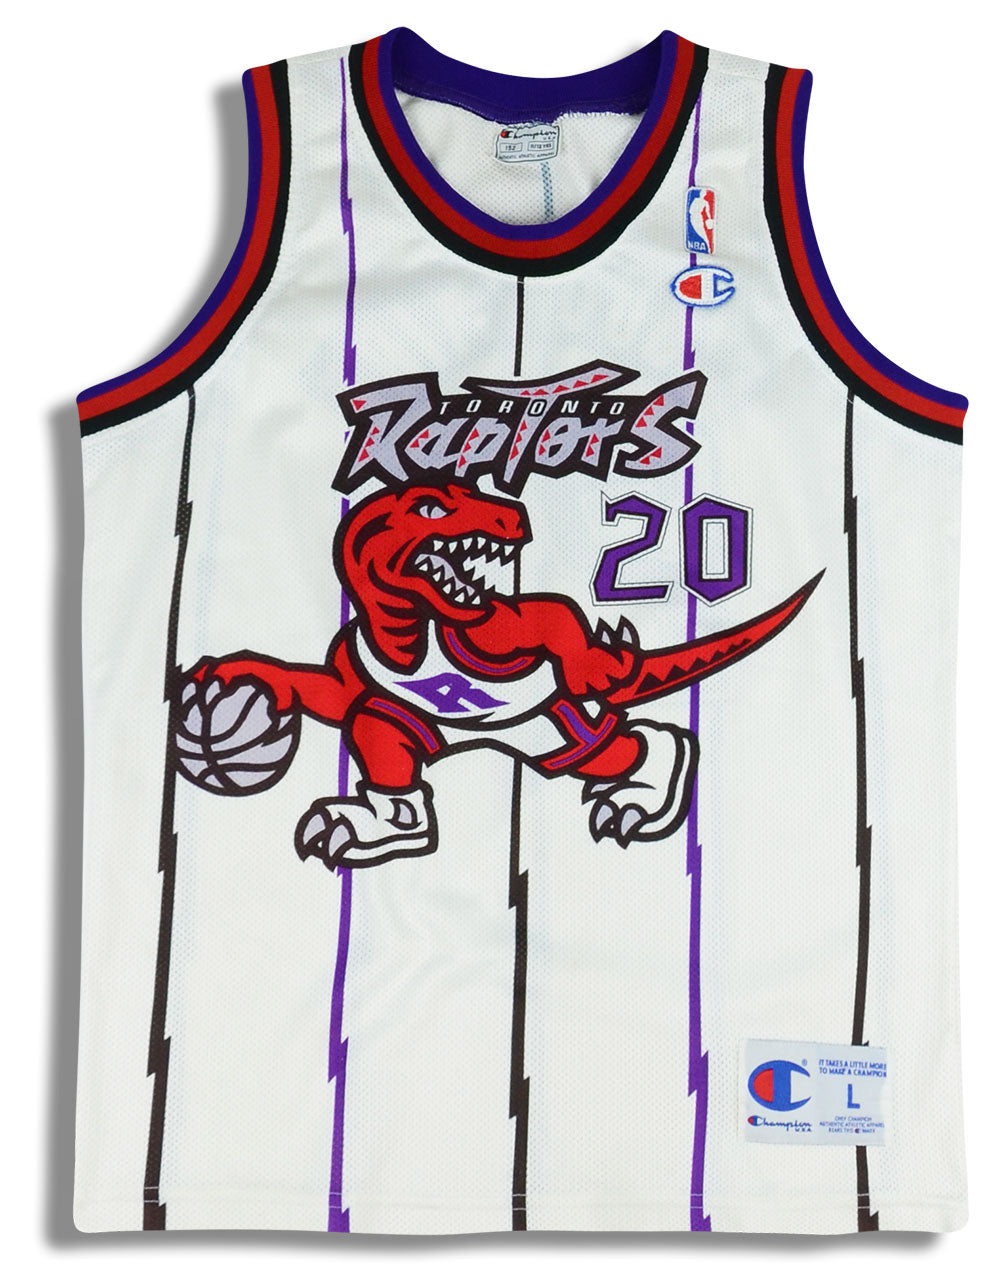 1995-1999 Toronto Raptors Uniforms by Chenglor55 on DeviantArt